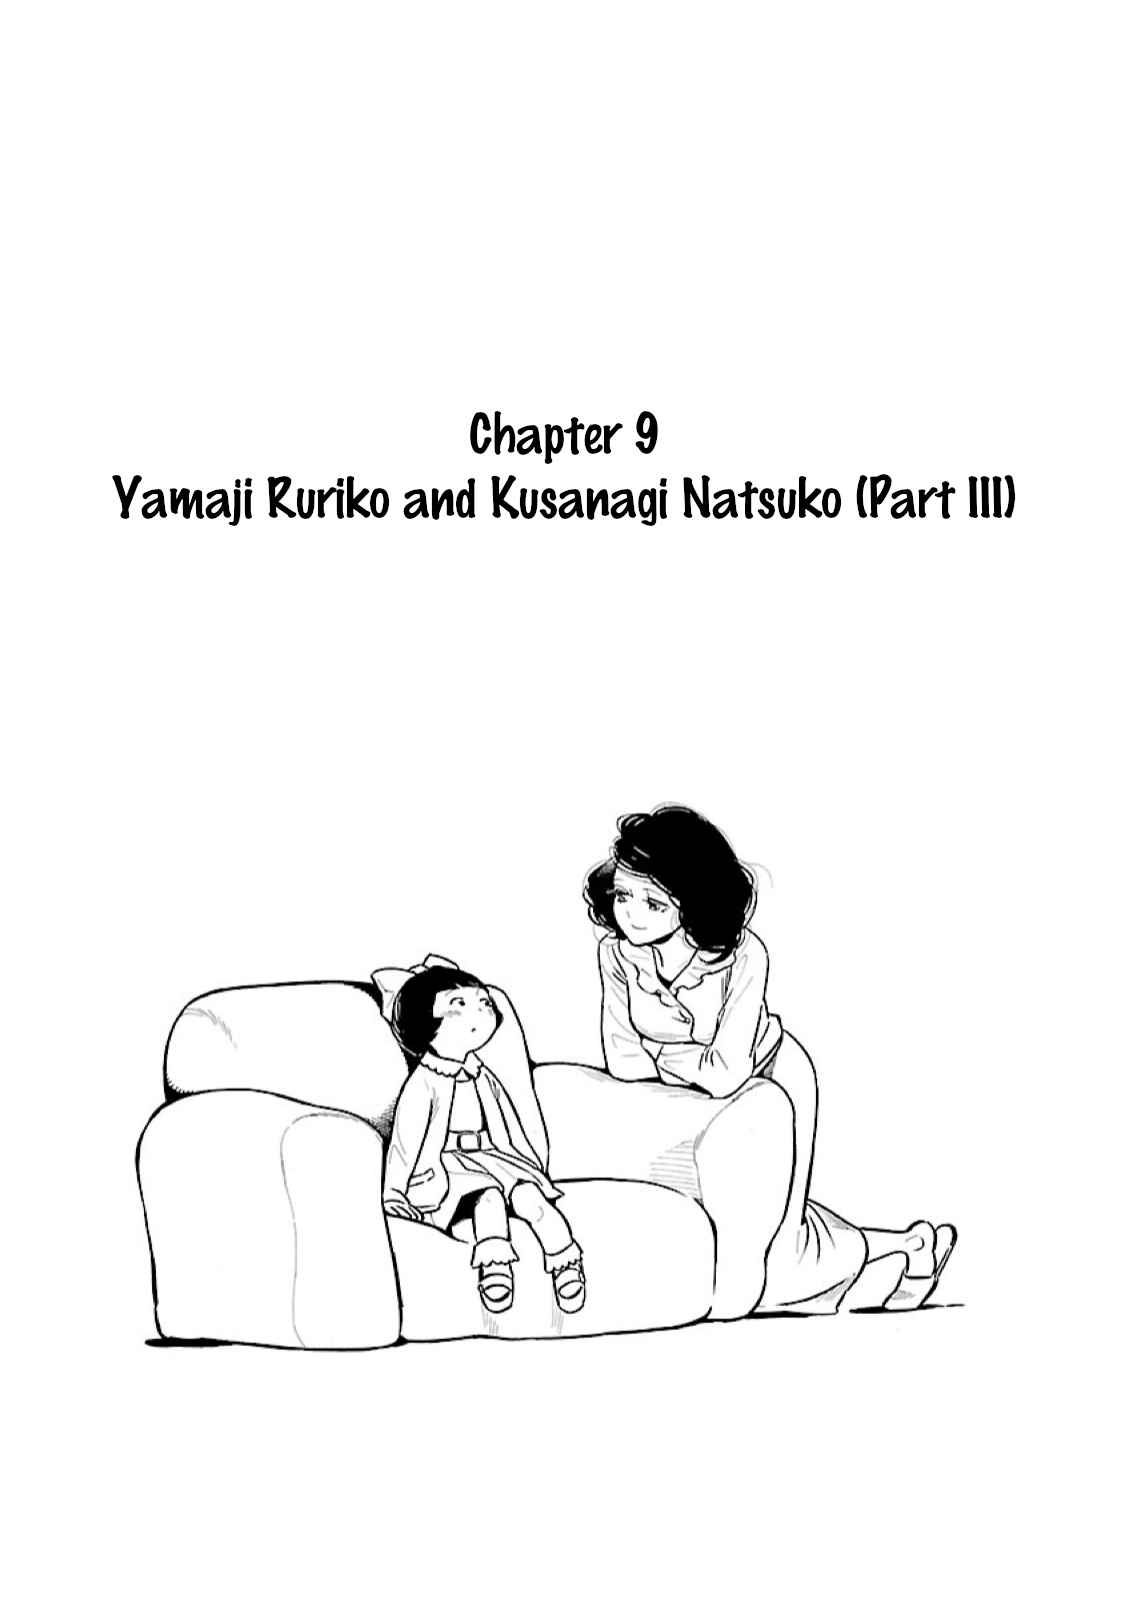 Awajima Hyakkei Vol. 2 Ch. 9 Yamaji Ruriko and Kusanagi Natsuko (Part III)